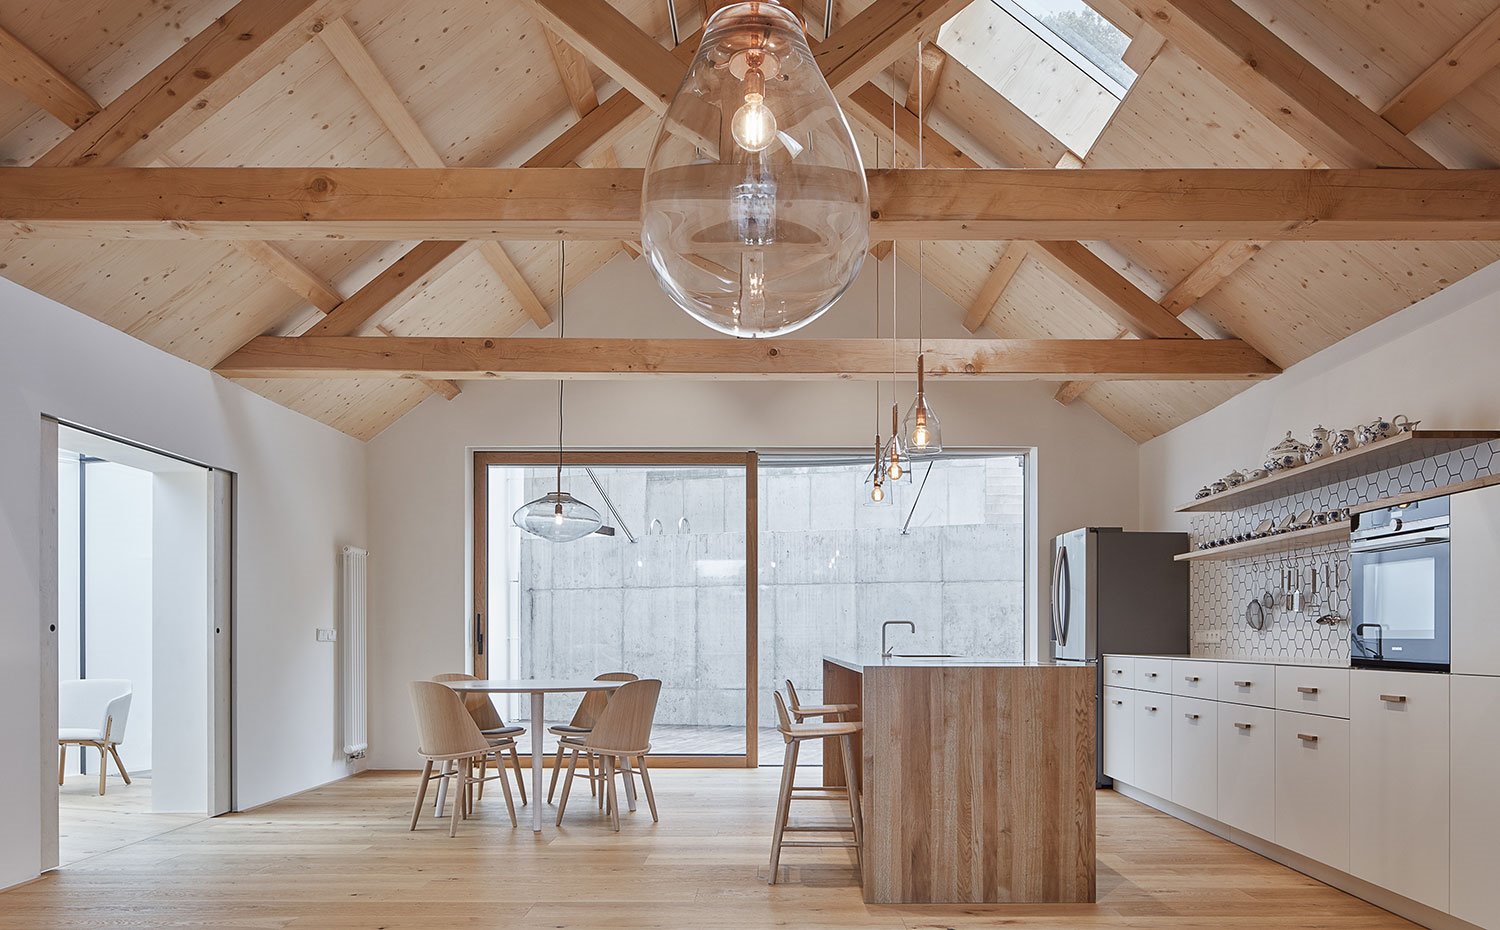 Cocina abierta con isla de madera, techo a dos aguas, mesa de comedor con sillas de madera